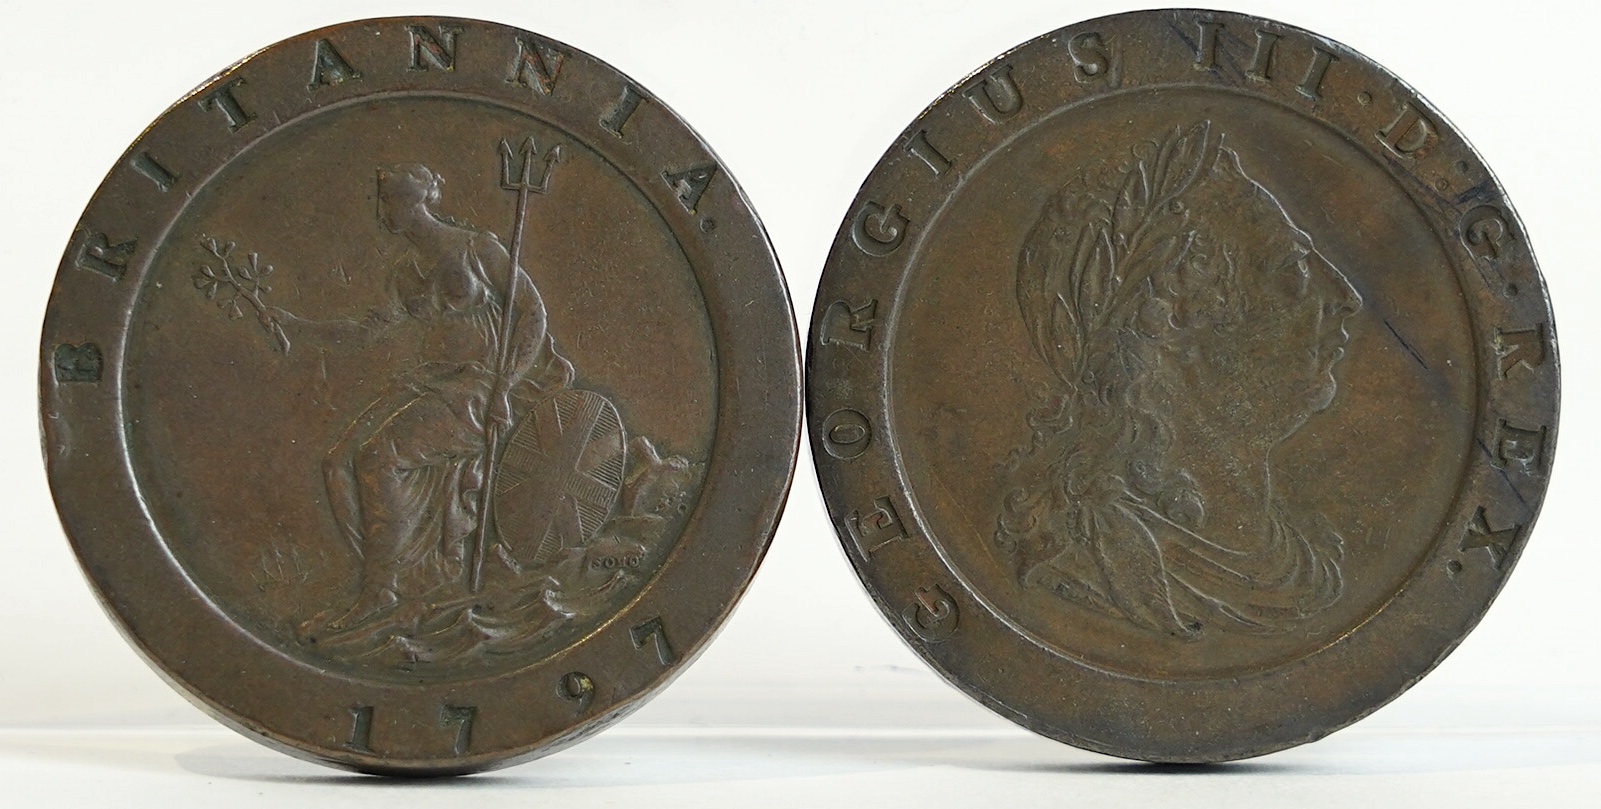 British coins, George III (1760-1820), two 1797 Soho Mint 